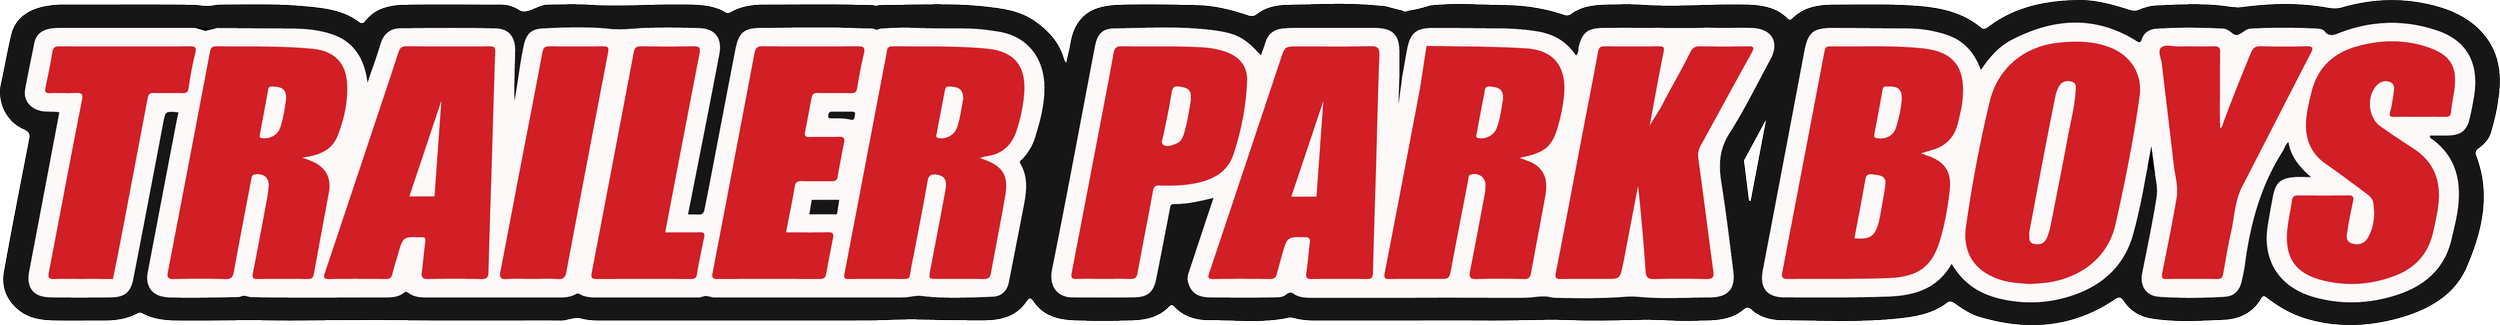 Trailer Park Boys Logo.png